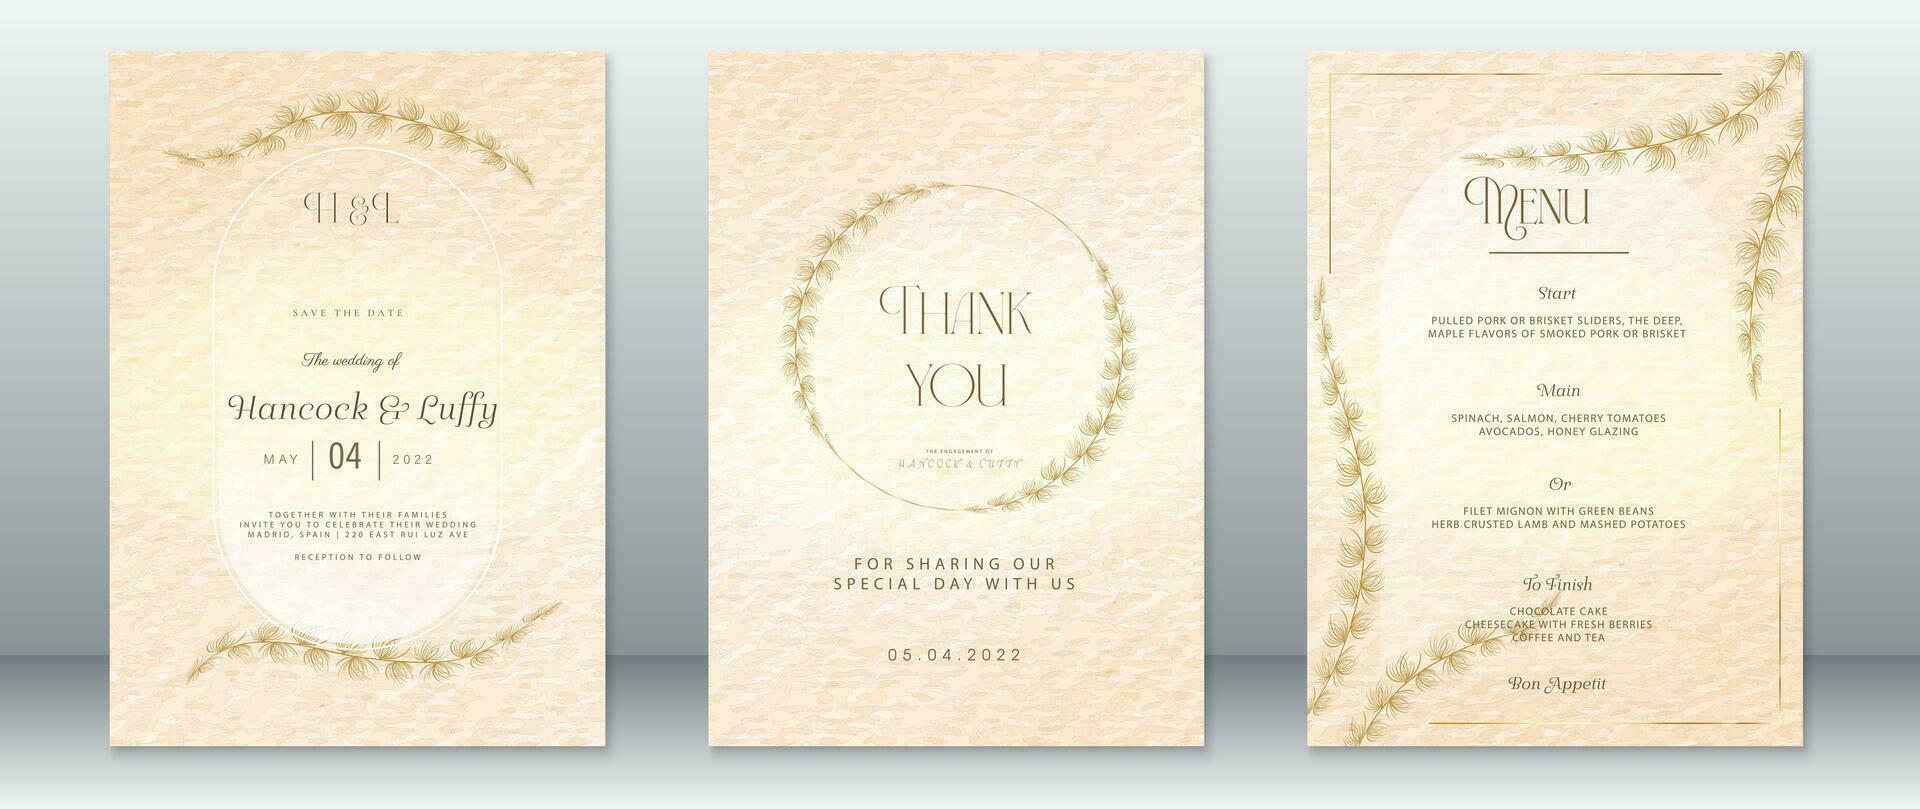 Golden wedding invitation card template luxury design vector